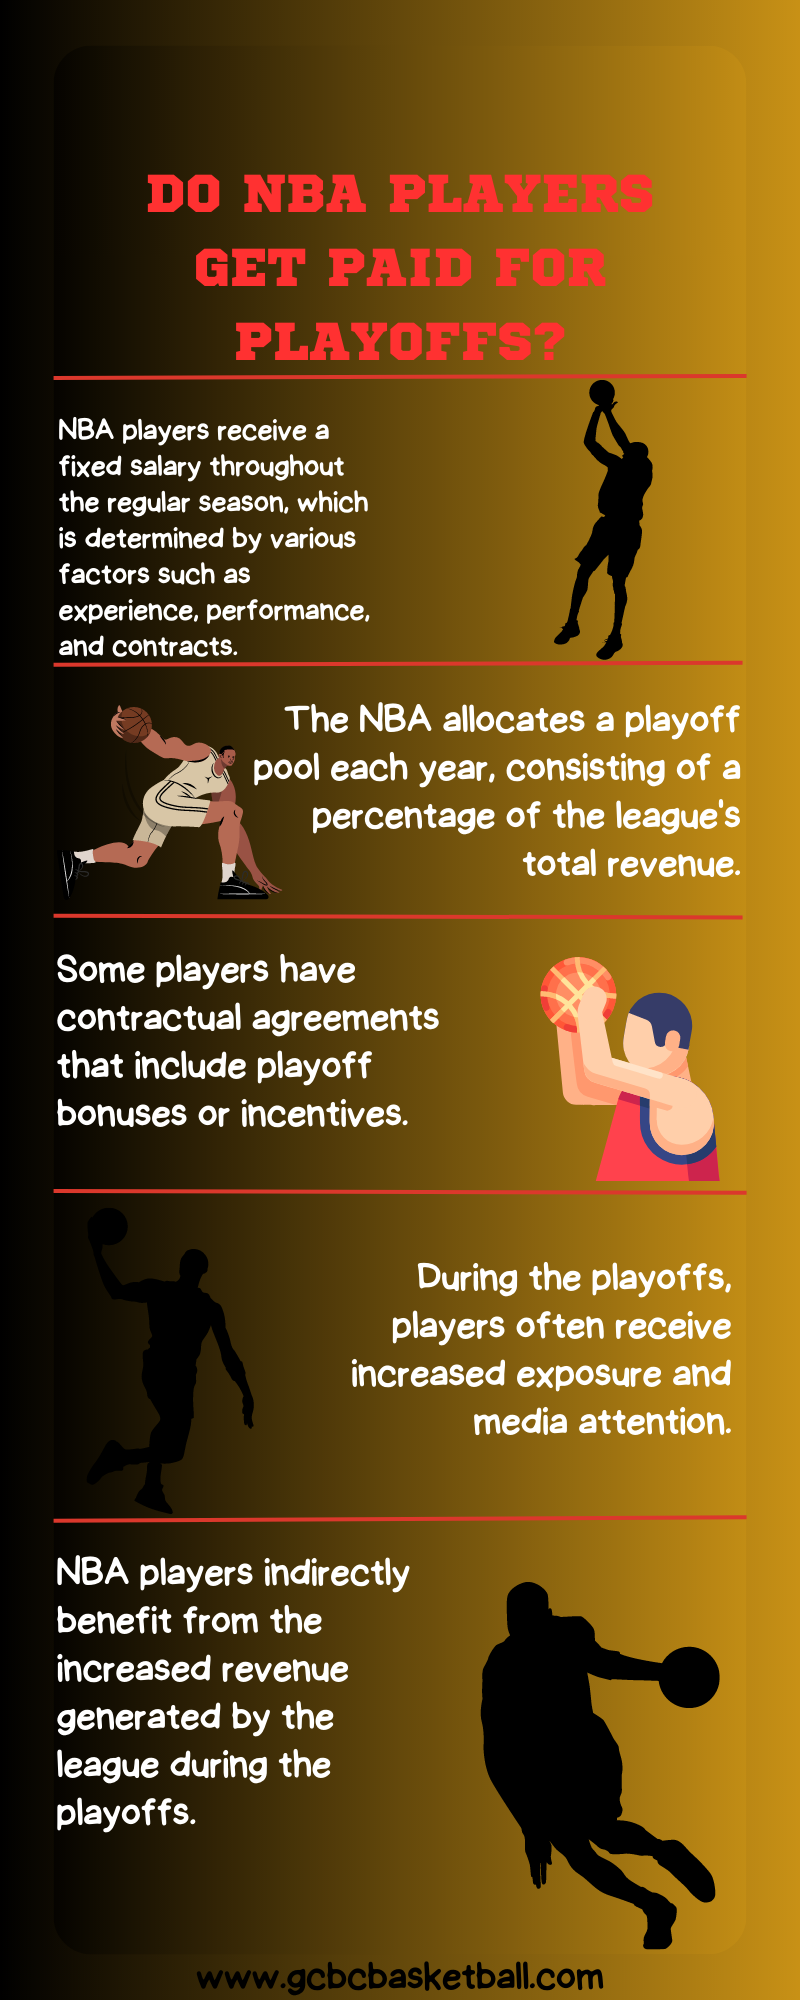 NBA players get money